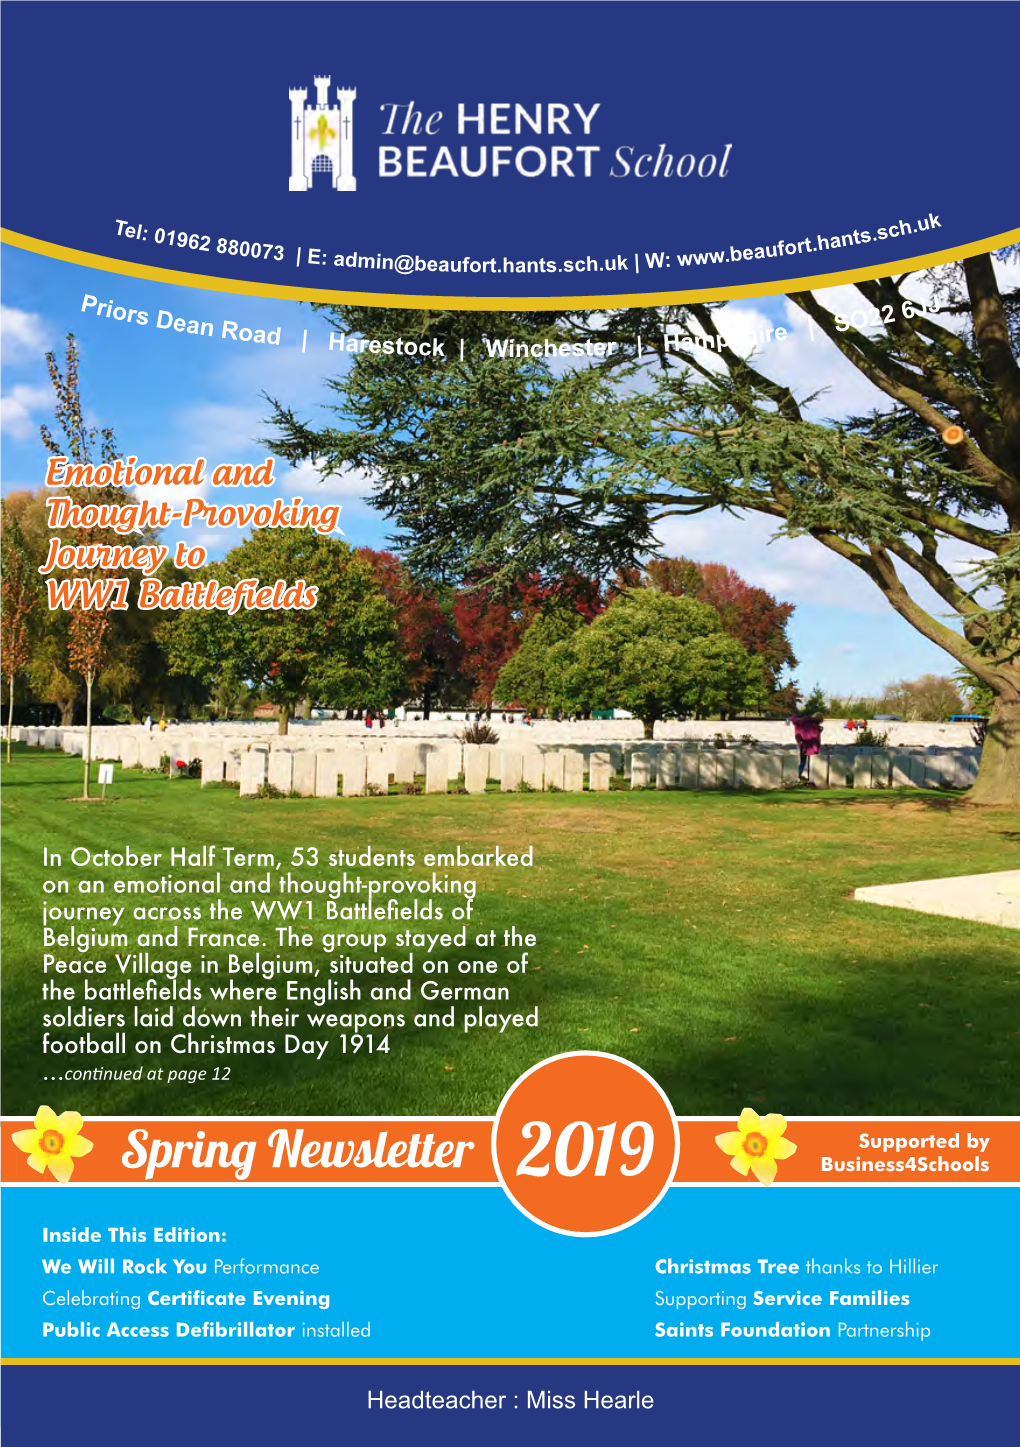 Spring Newsletter 2019 Business4schools